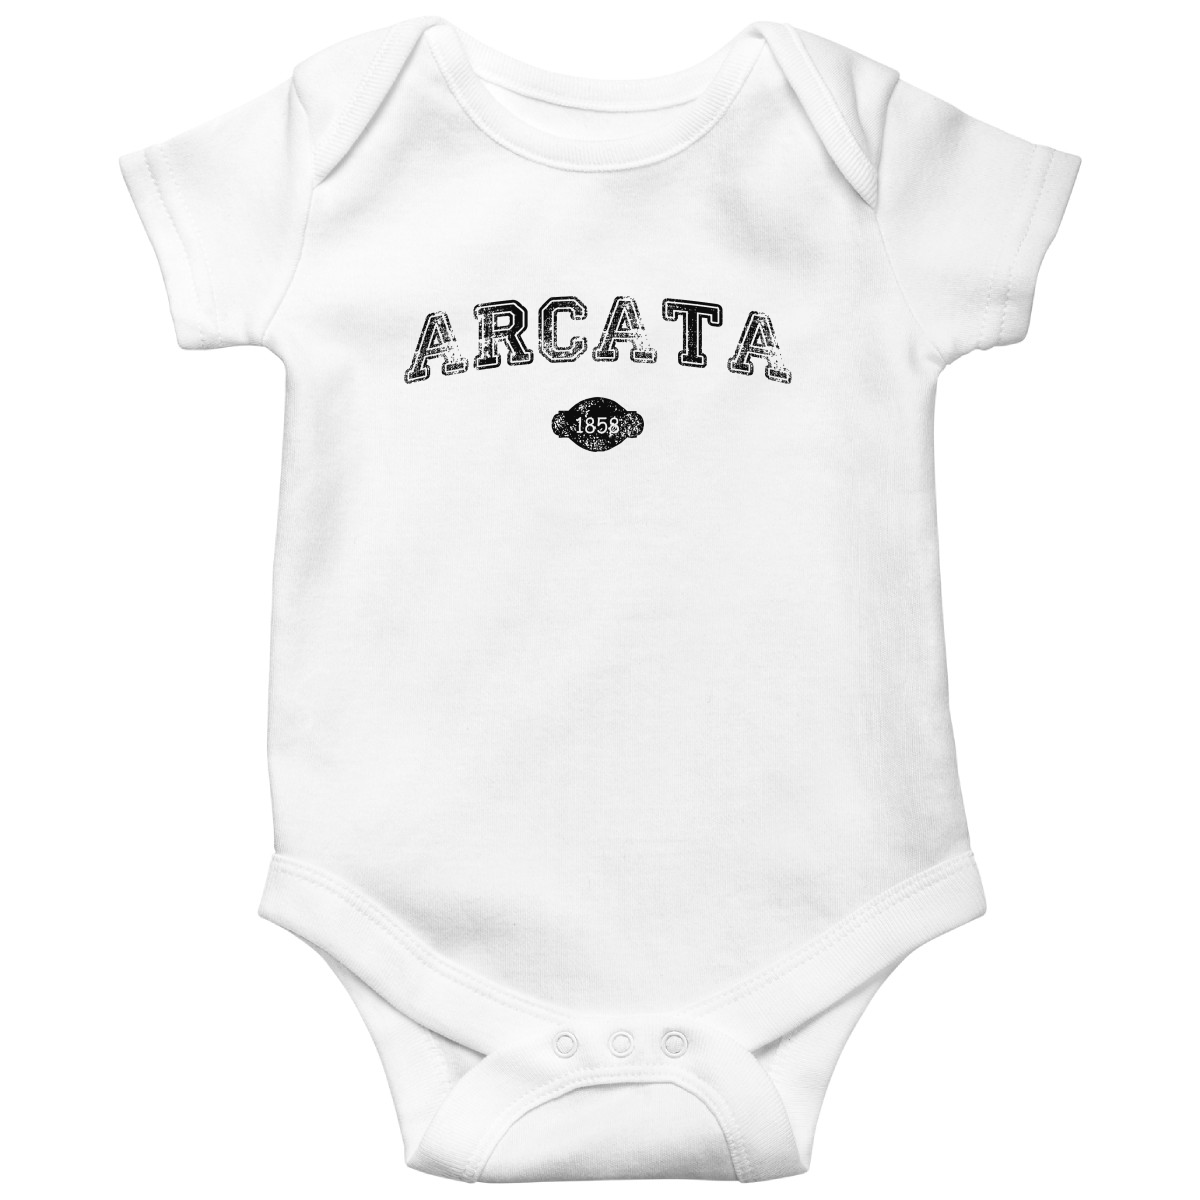 Arcata 1858 Represent Baby Bodysuits | White